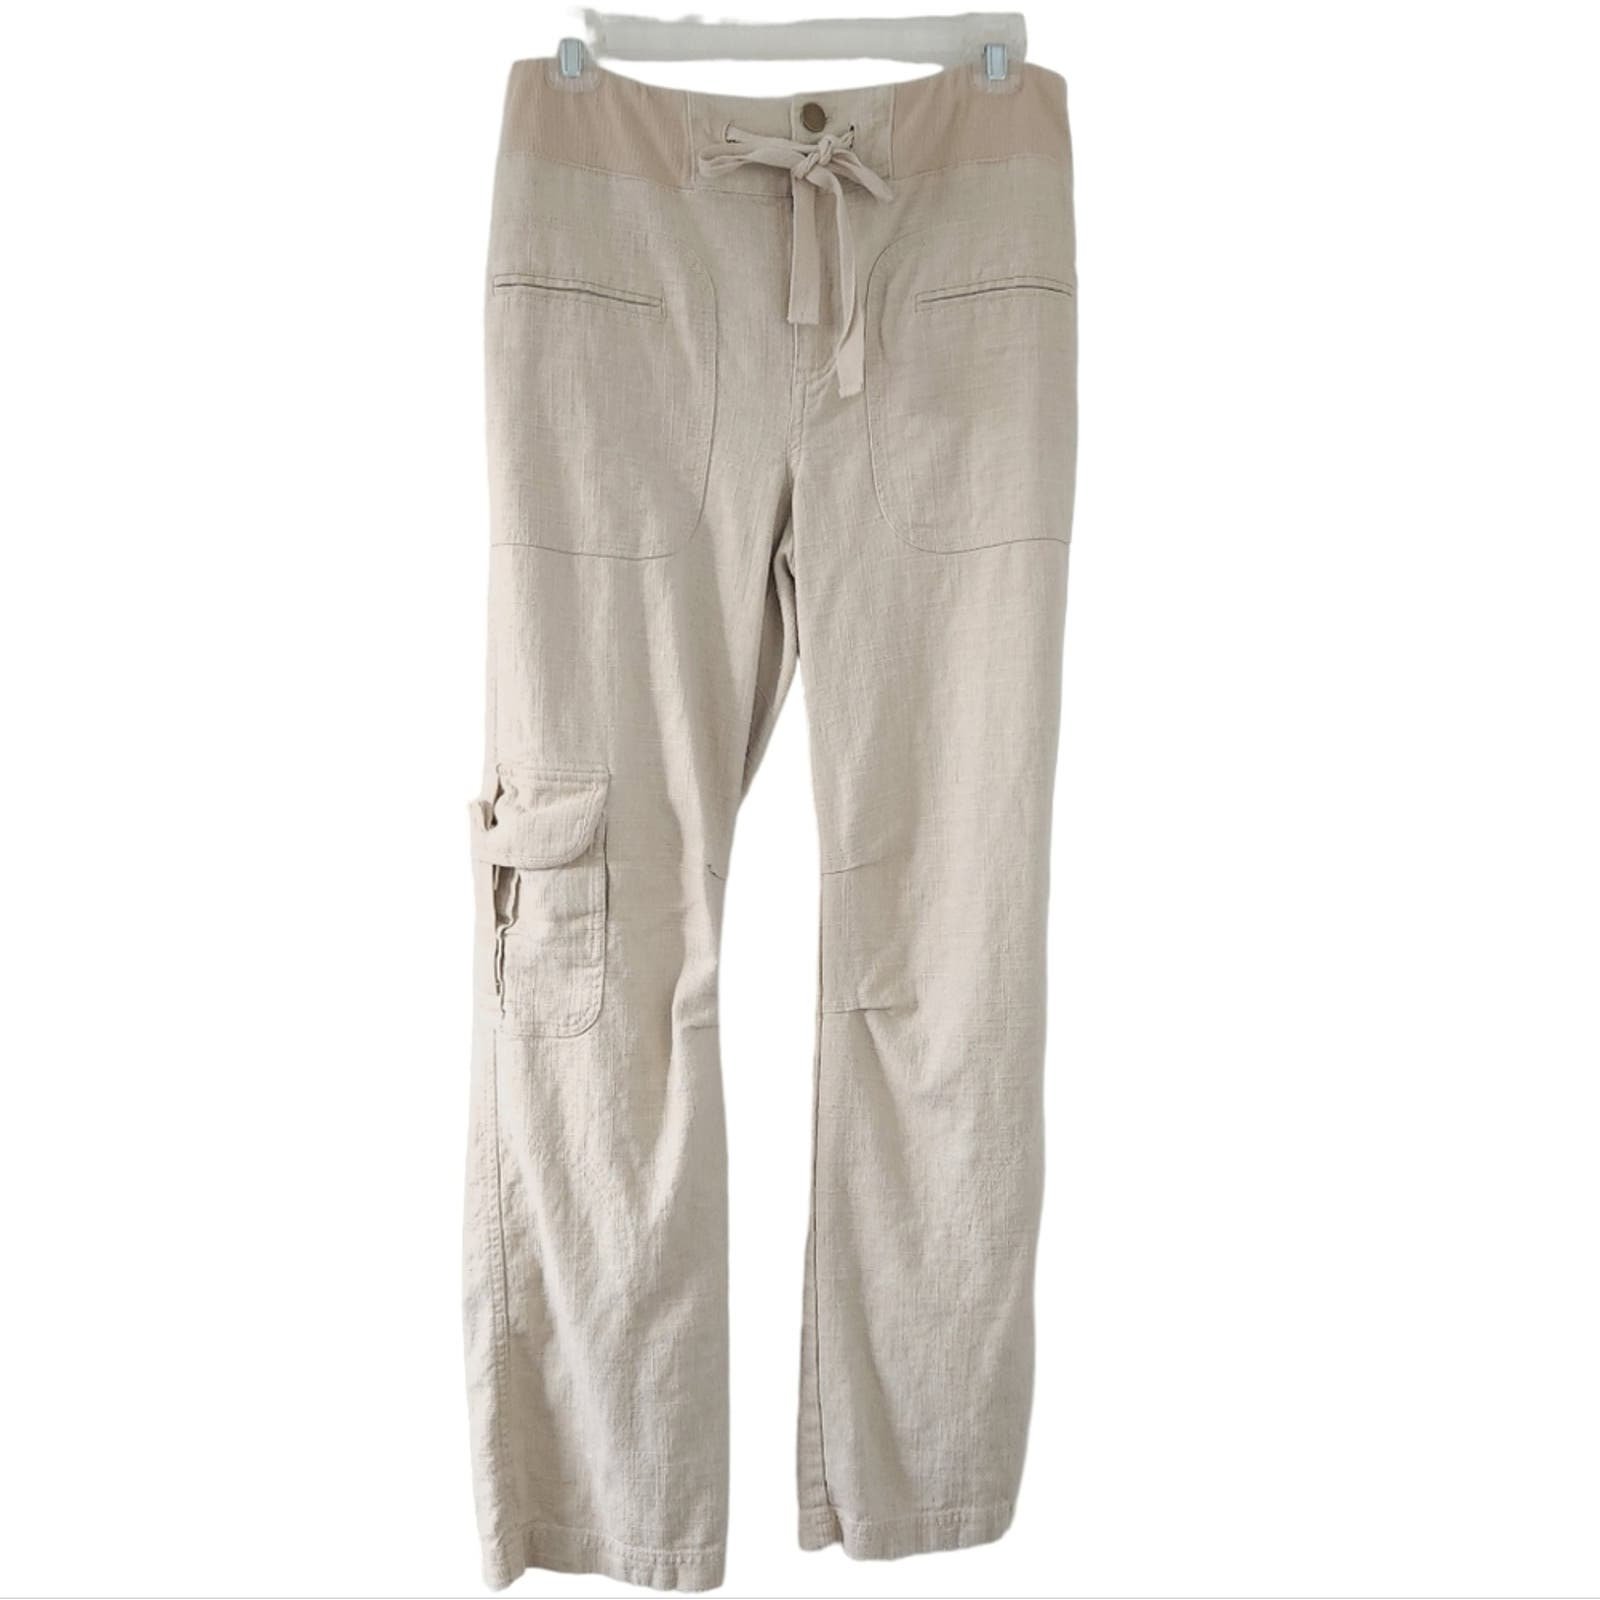 Discounted Soft Surroundings Linen Blend Pants Beige XS